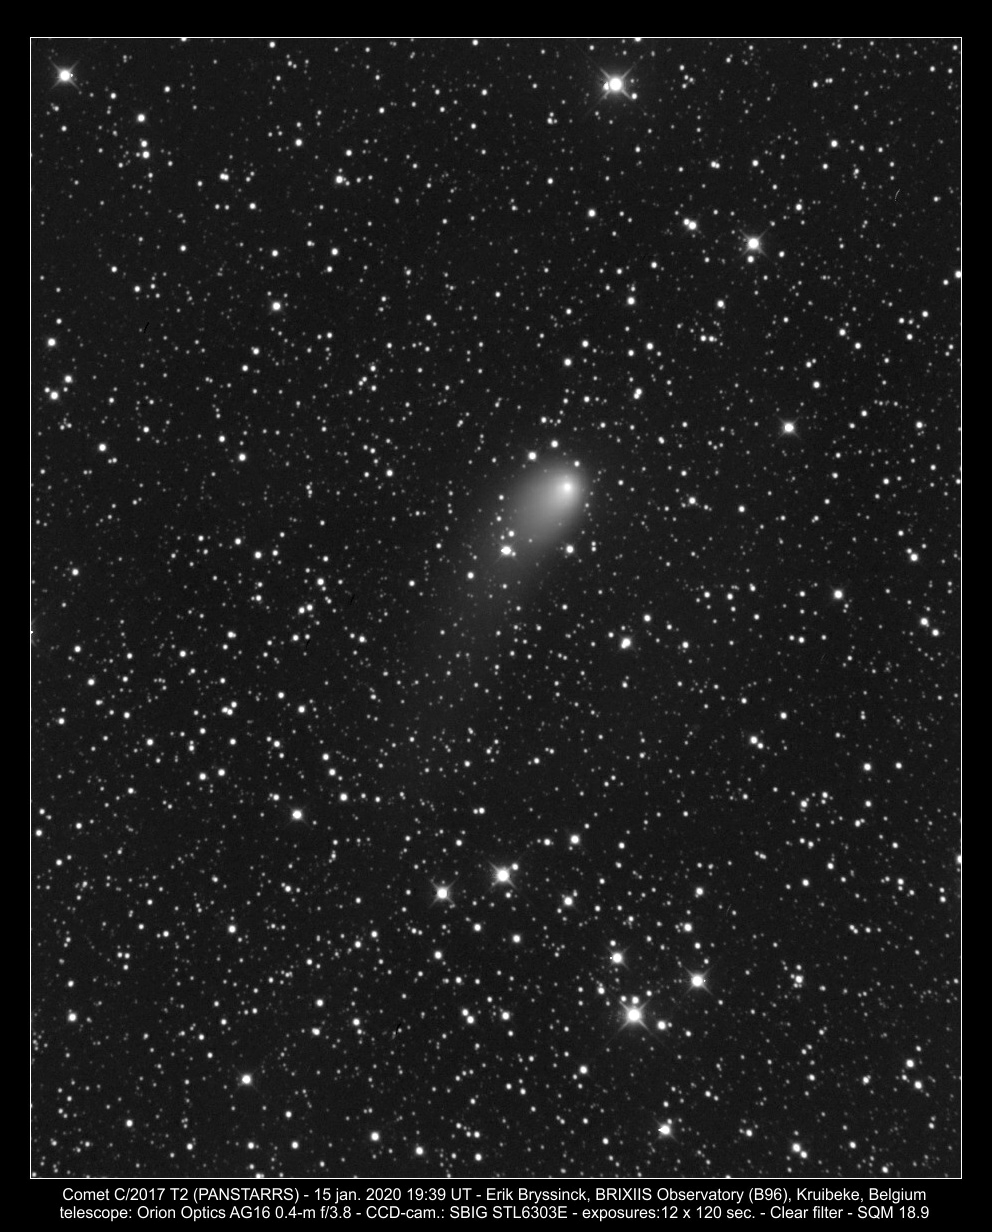 comet C/2017 T2 (PANSTARRS) on 15 jan. 2020, Erik Bryssinck, BRIXIIS Observatory, B96 observatory